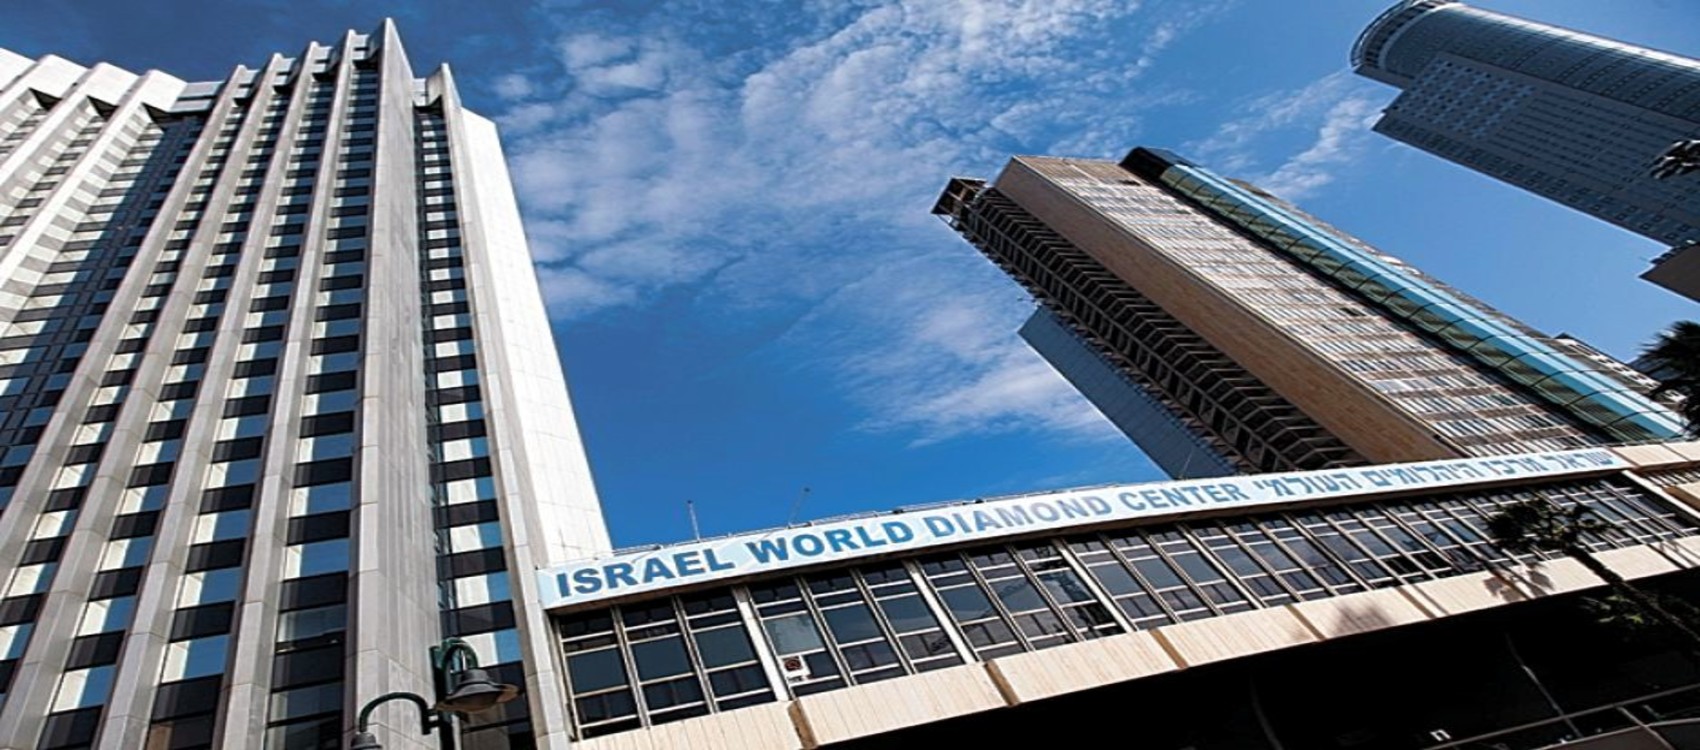 Tel Aviv Diamond Exchange Tour - Visit the world largest diamond exchange center